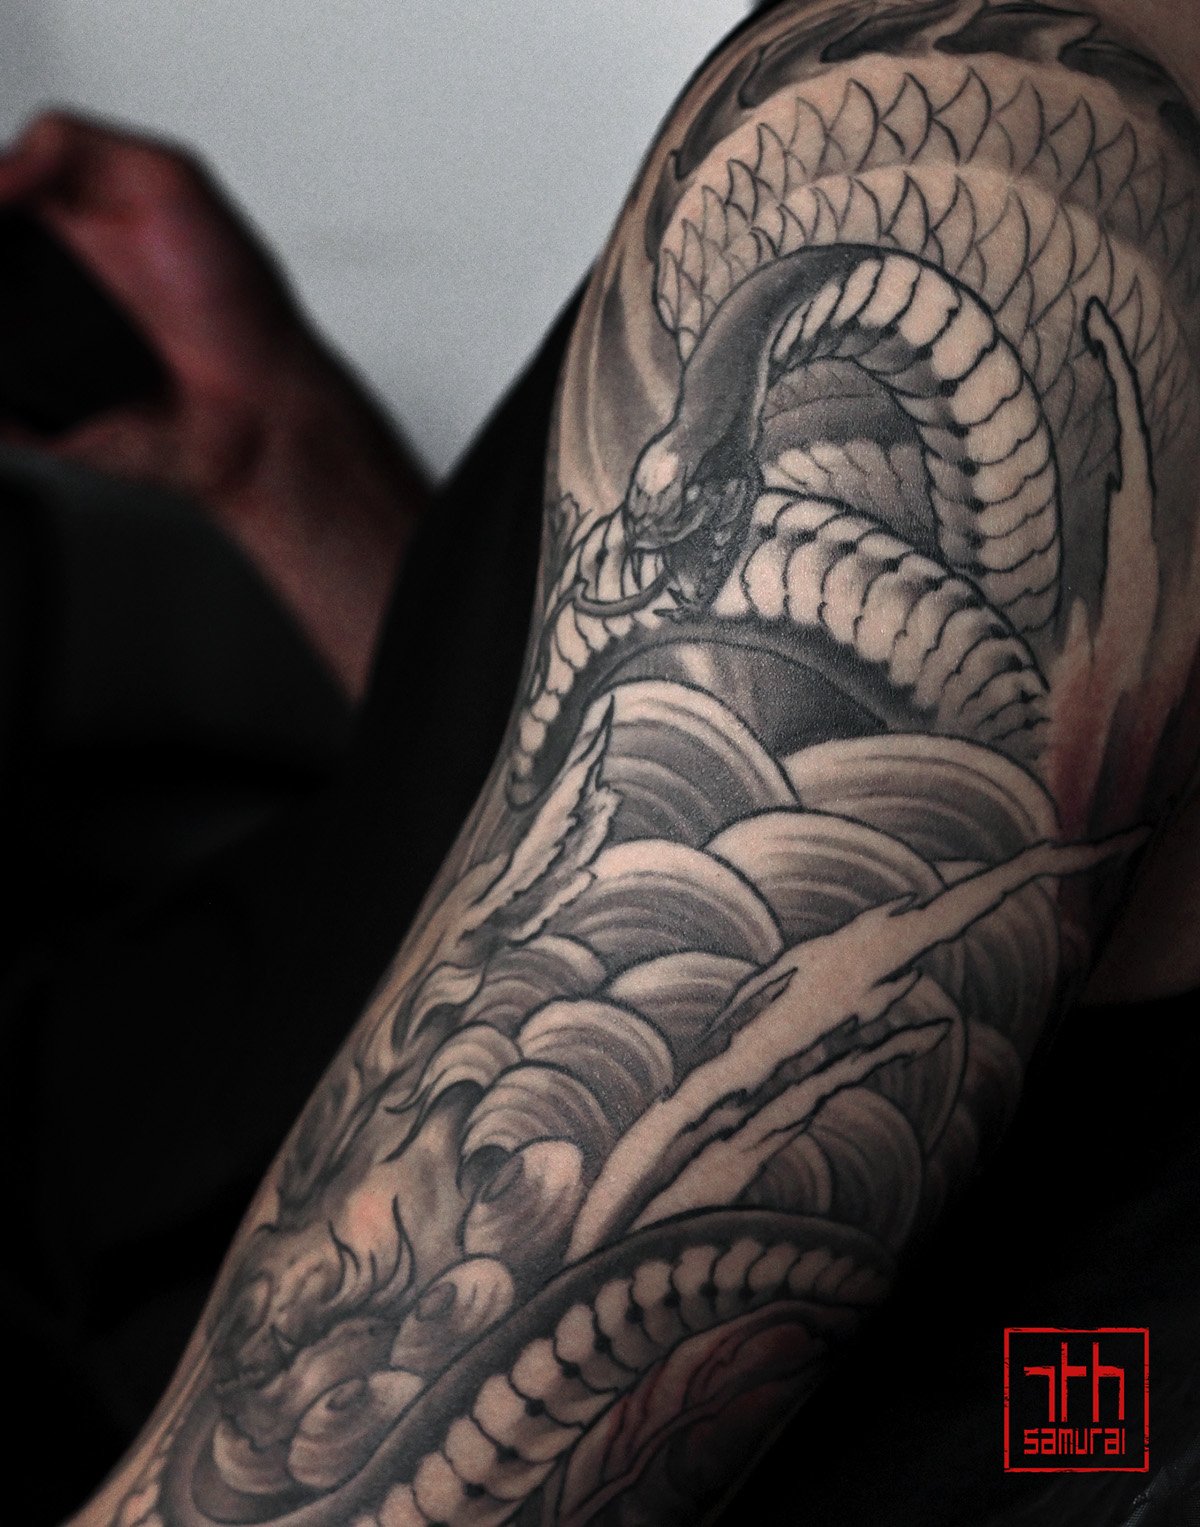 Asian zodiacs: year of Snake fudog Men's neo japanese asian astrology arm sleeve tattoo  asian artist: Kai 7th Samurai. YEG Edmonton, Alberta, Canada 2023 best 2024 